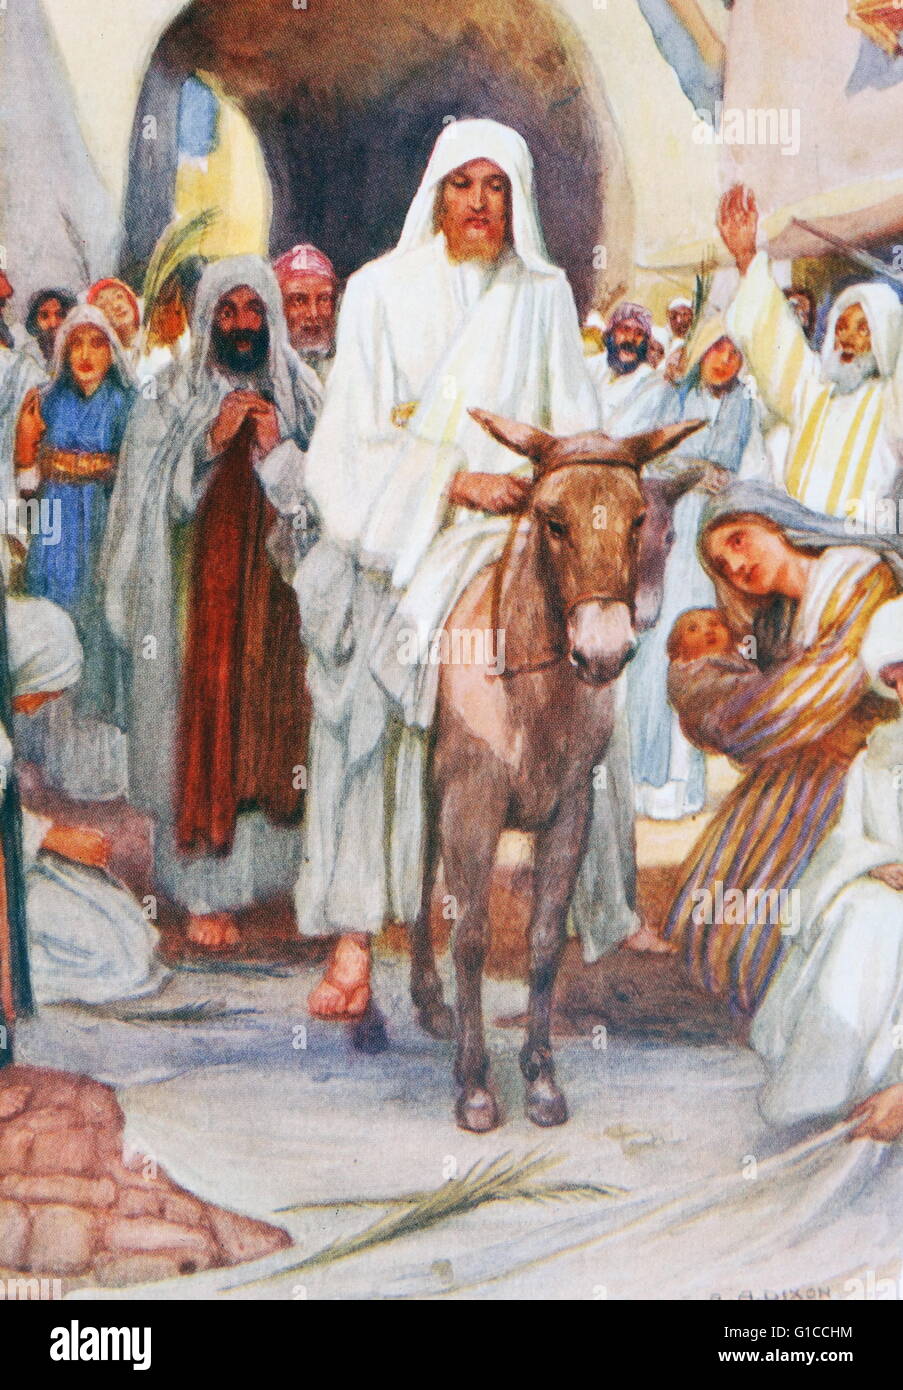 Jesus on donkey hi-res stock photography and images - Alamy